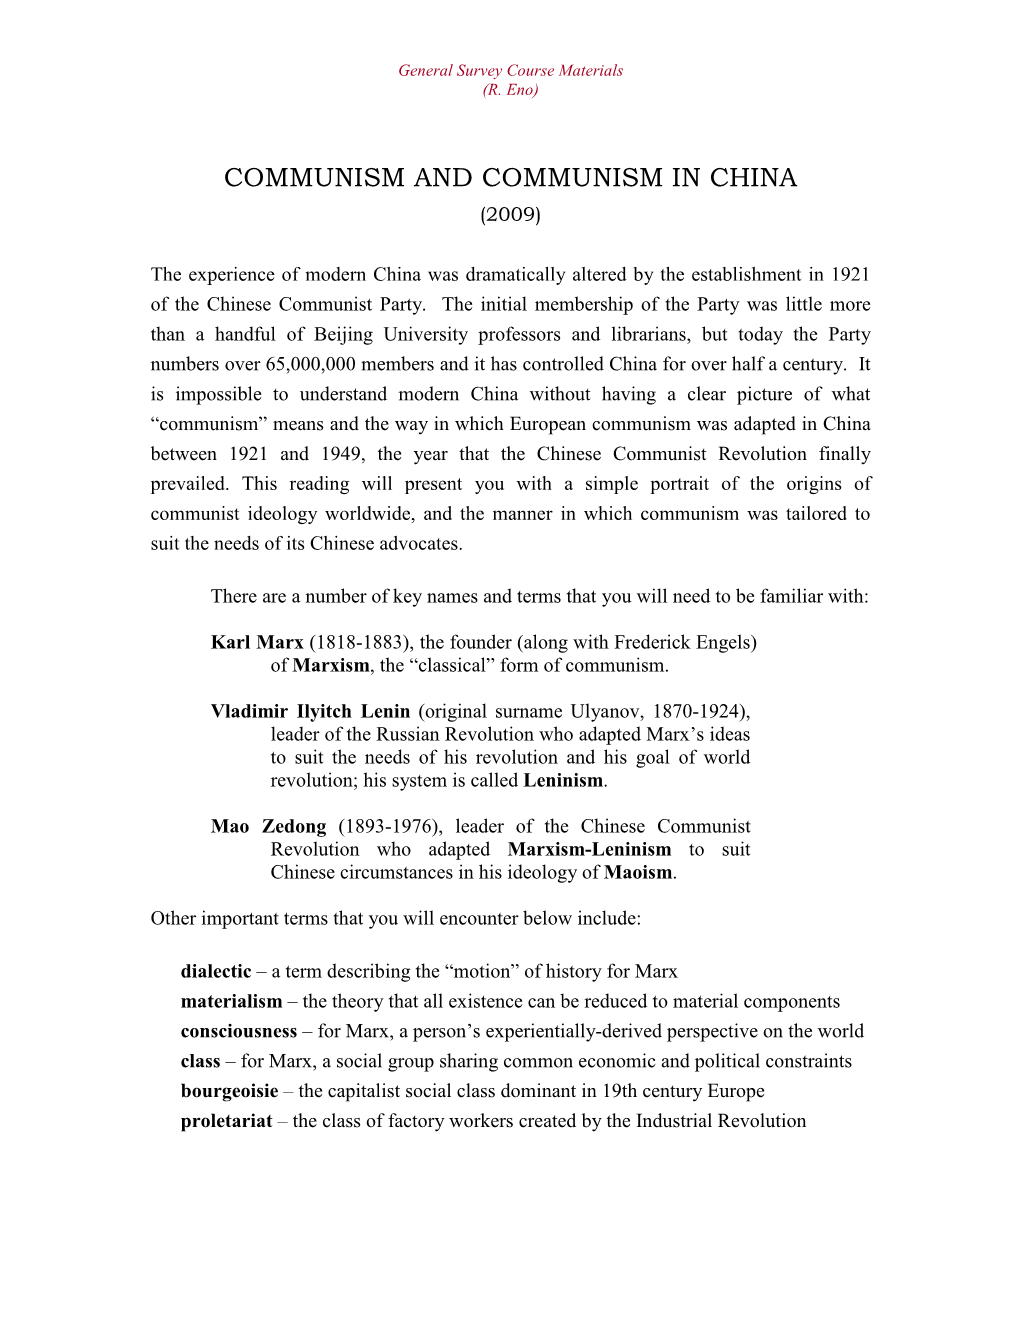 Communism and Communism in China (2009)